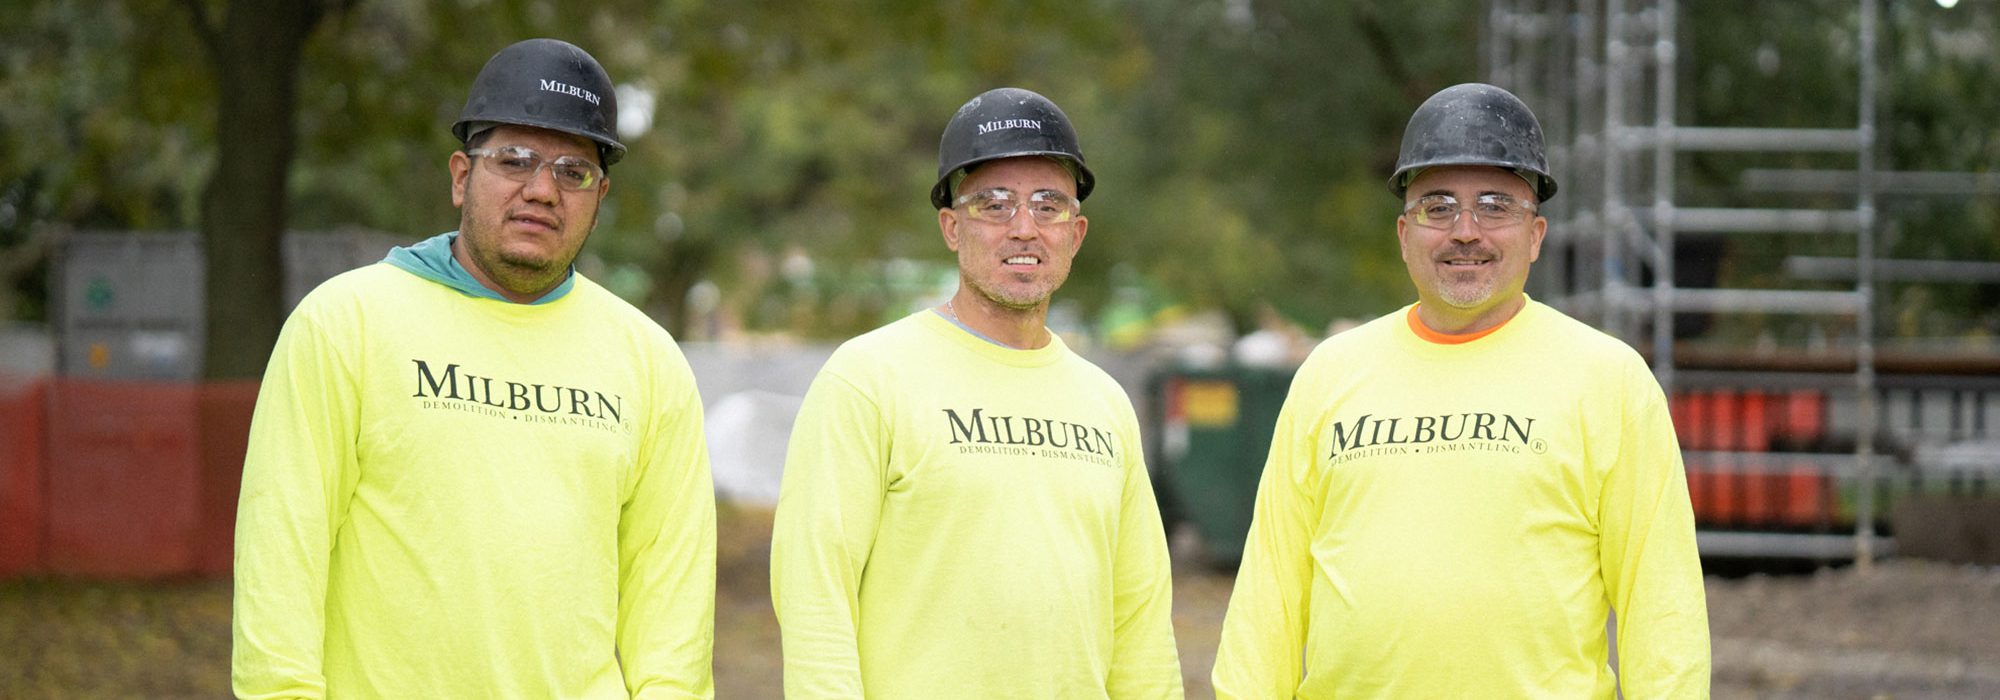 Happy Milburn employees